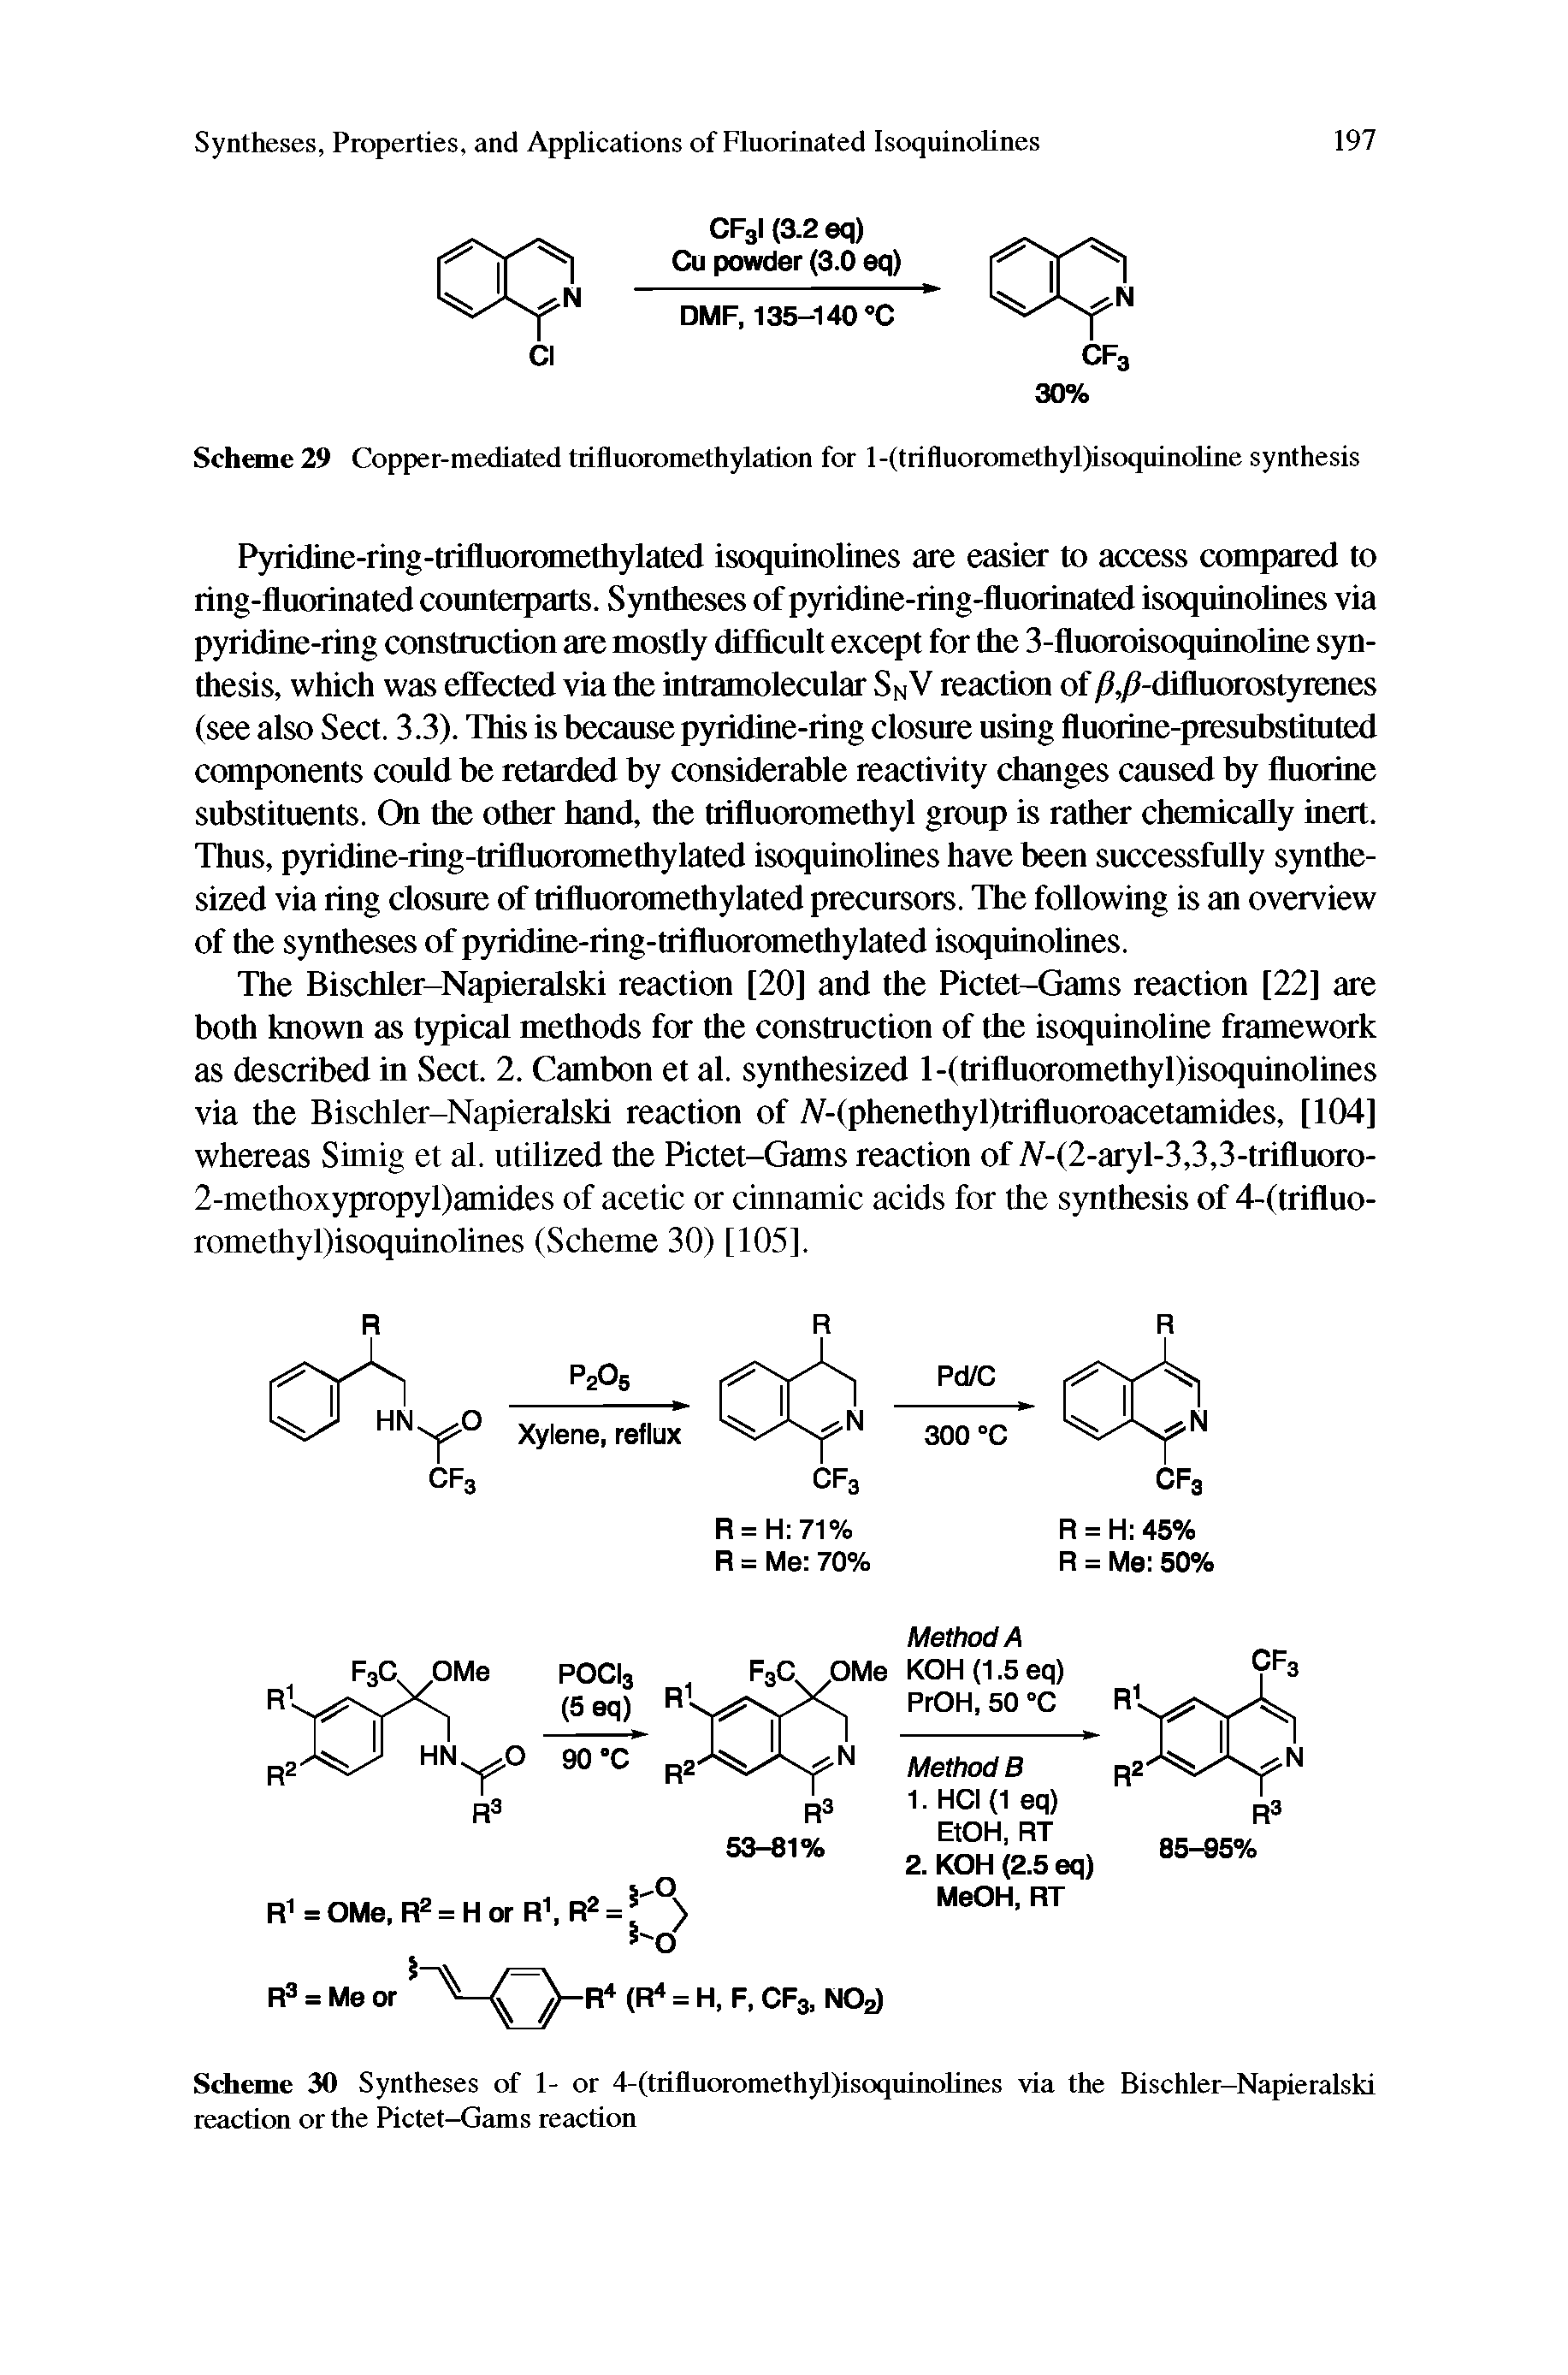 Scheme 30 Syntheses of 1- or 4-(trifluoromethyl)isoquinotines via the Bischler-Napieralski reaction or the Pictet-Gams reaction...